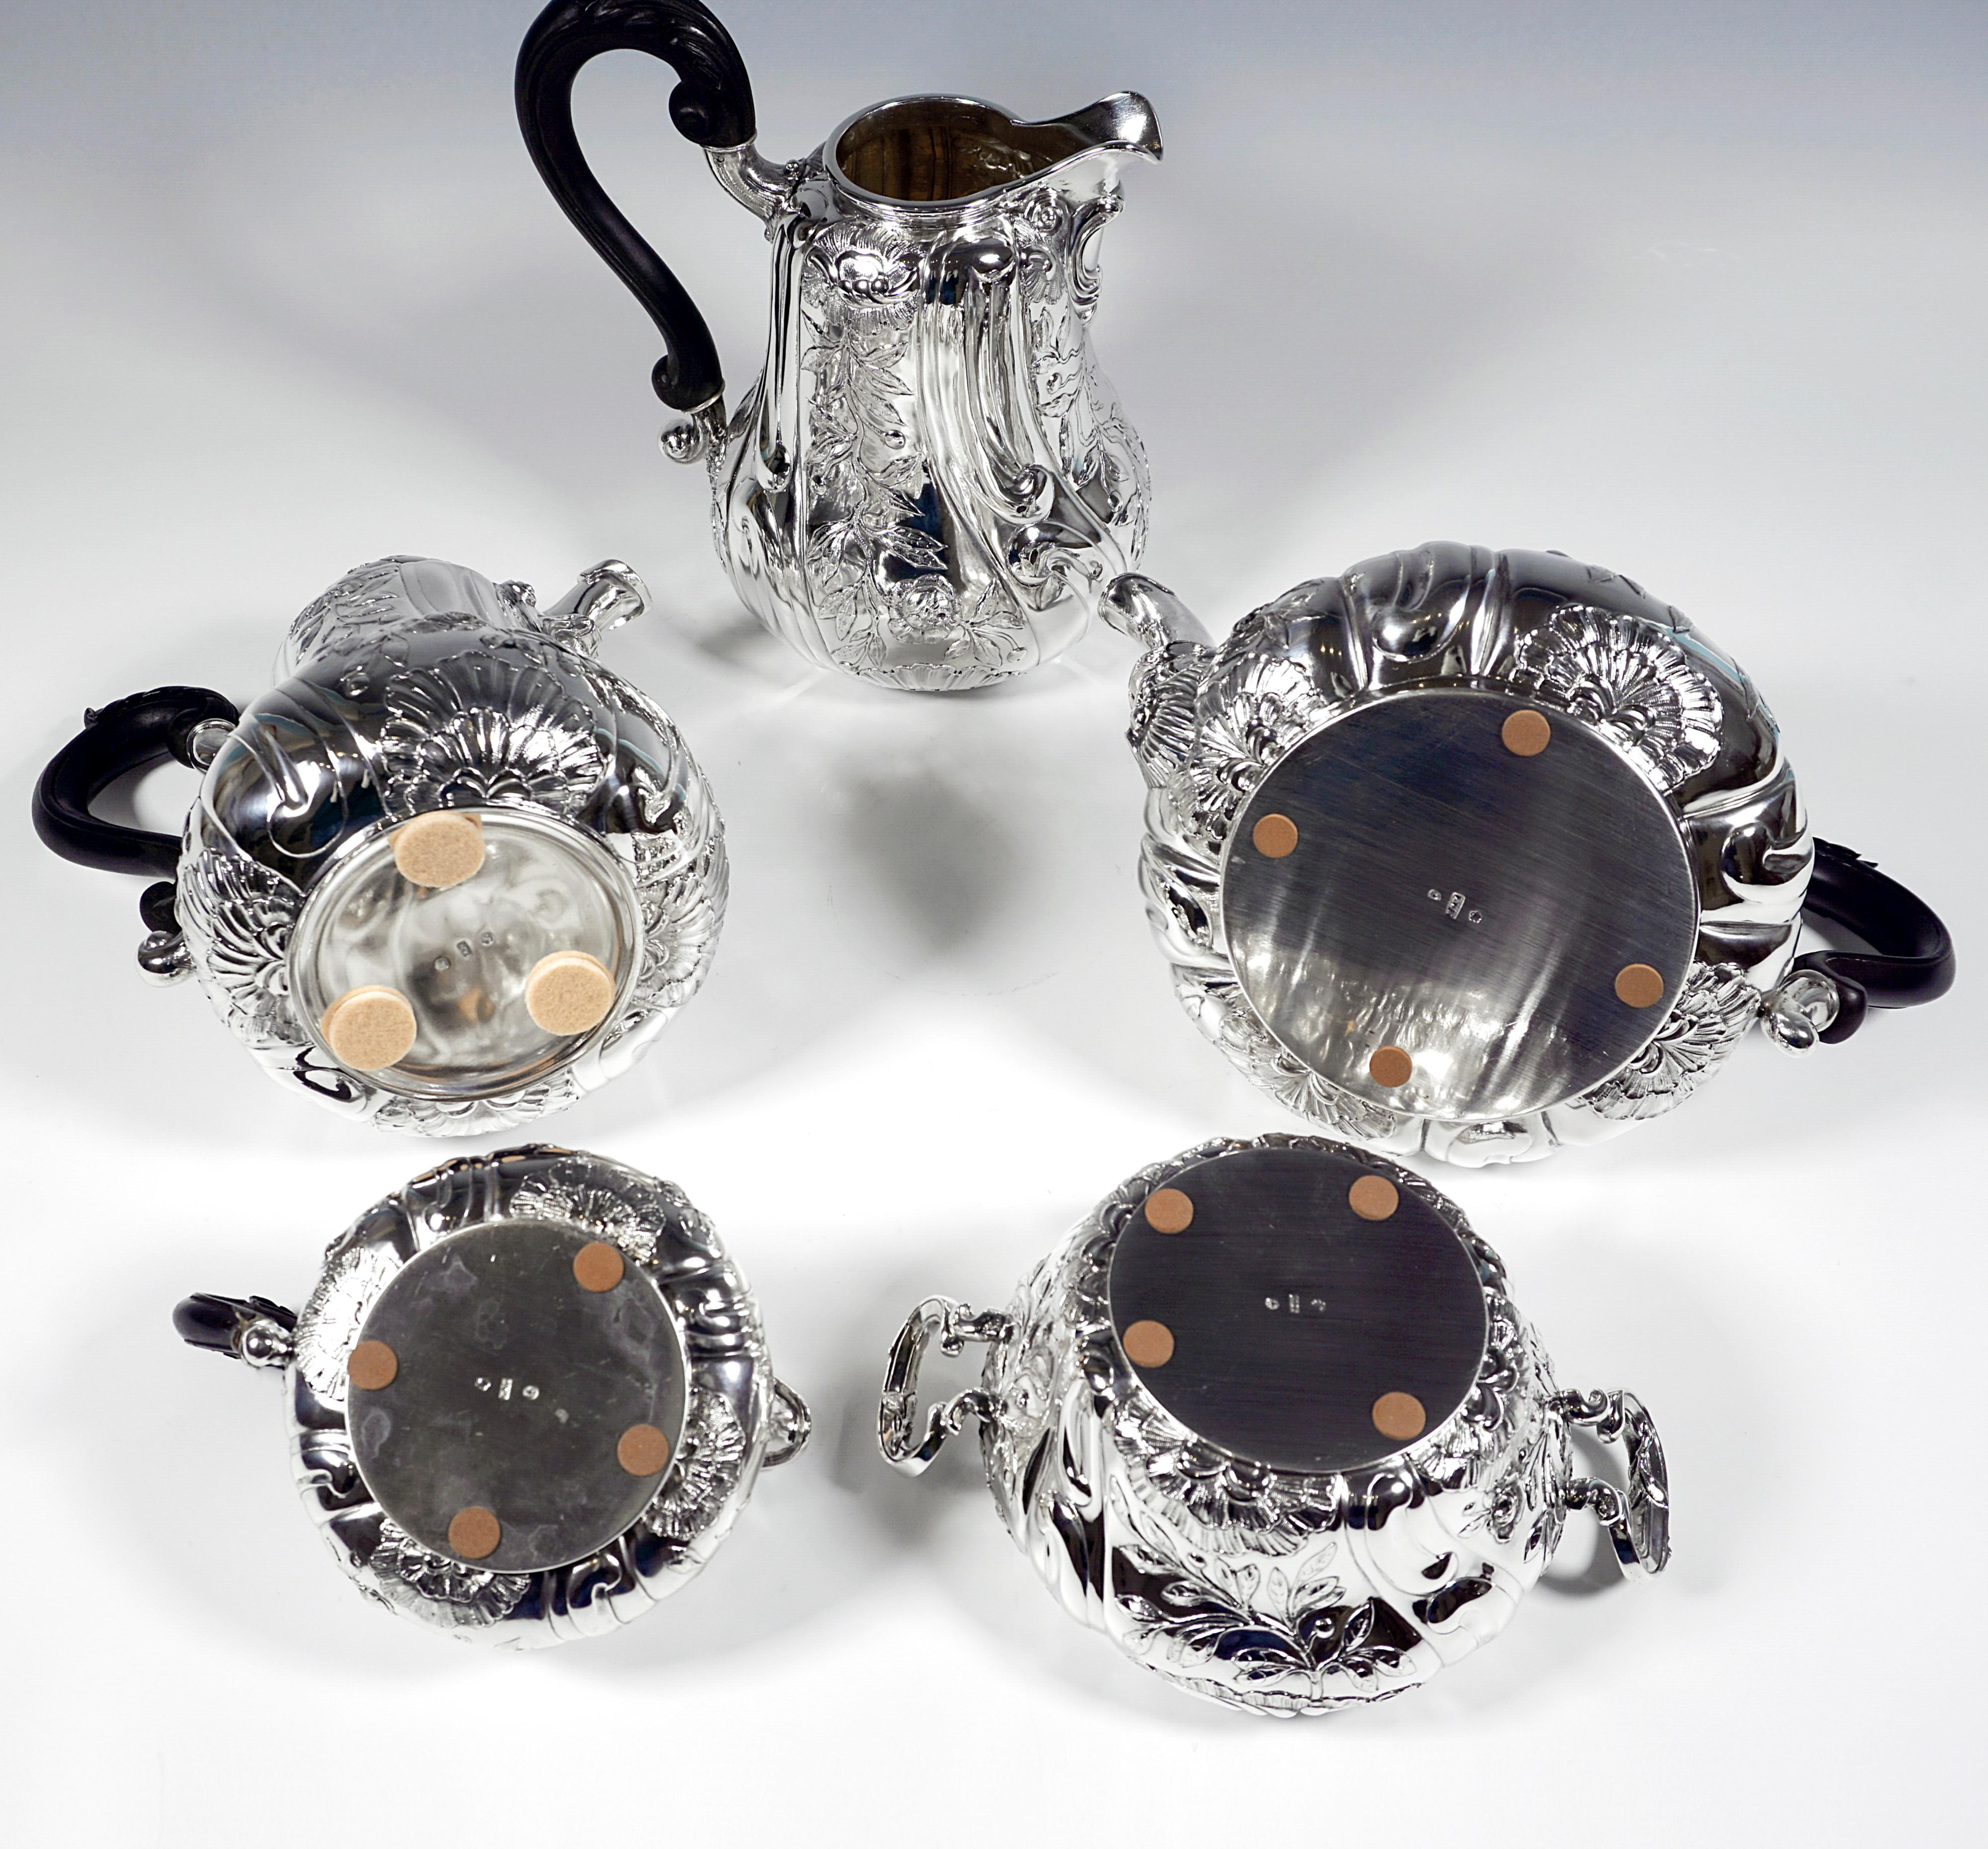 Art Nouveau Silver Koffee And Tea Set With Samowar, Klinkosch Vienna, 1900 For Sale 4